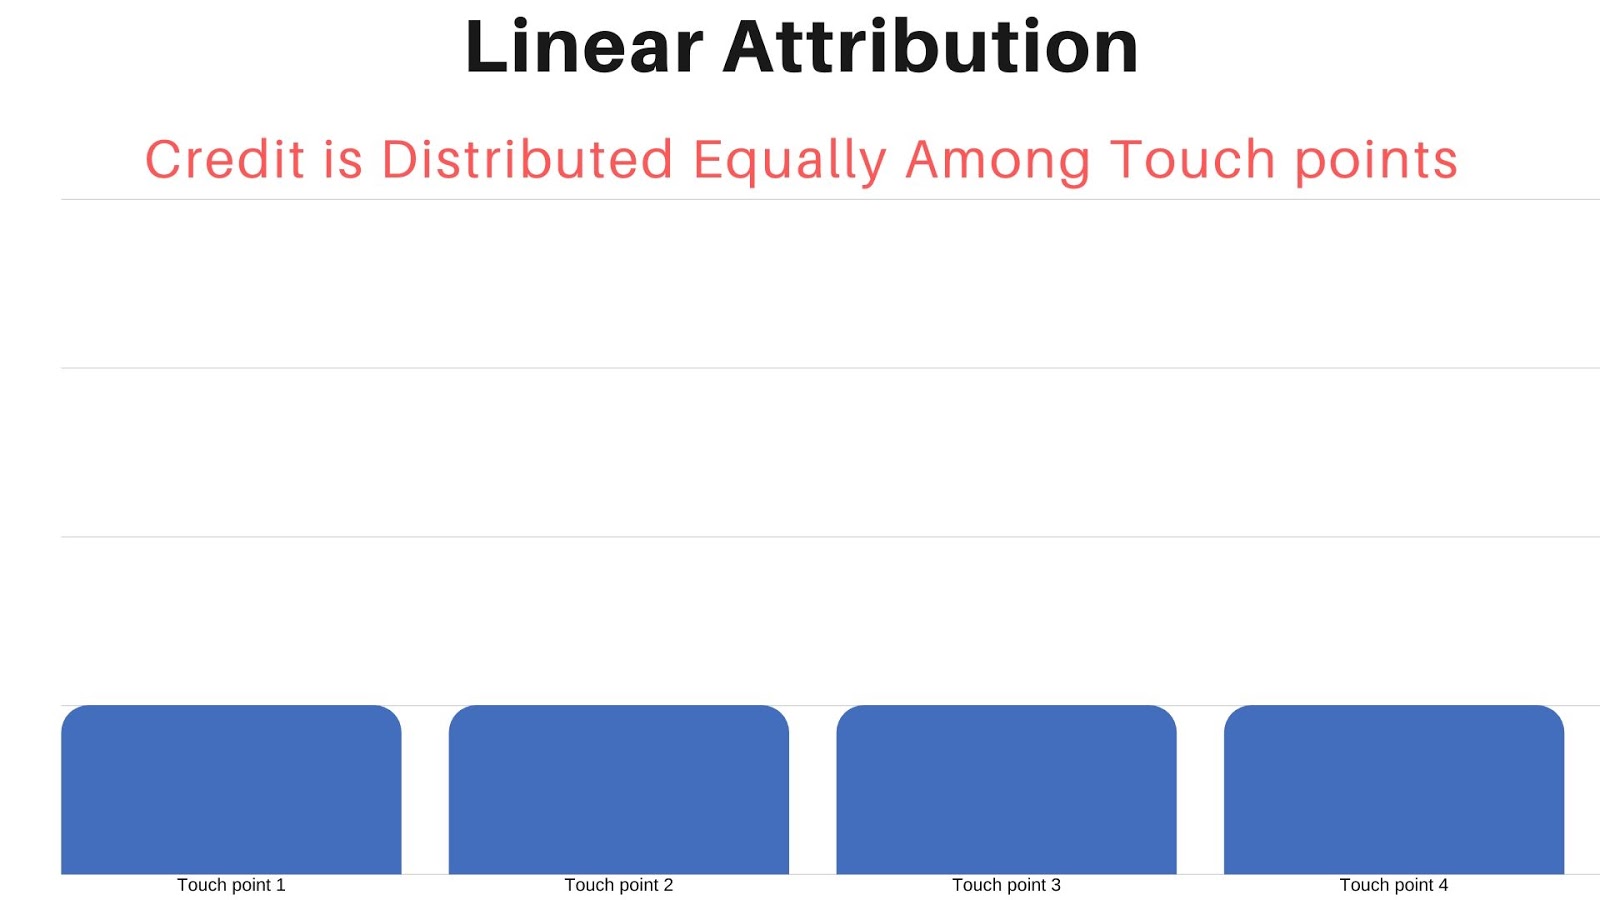 Linear Attribution